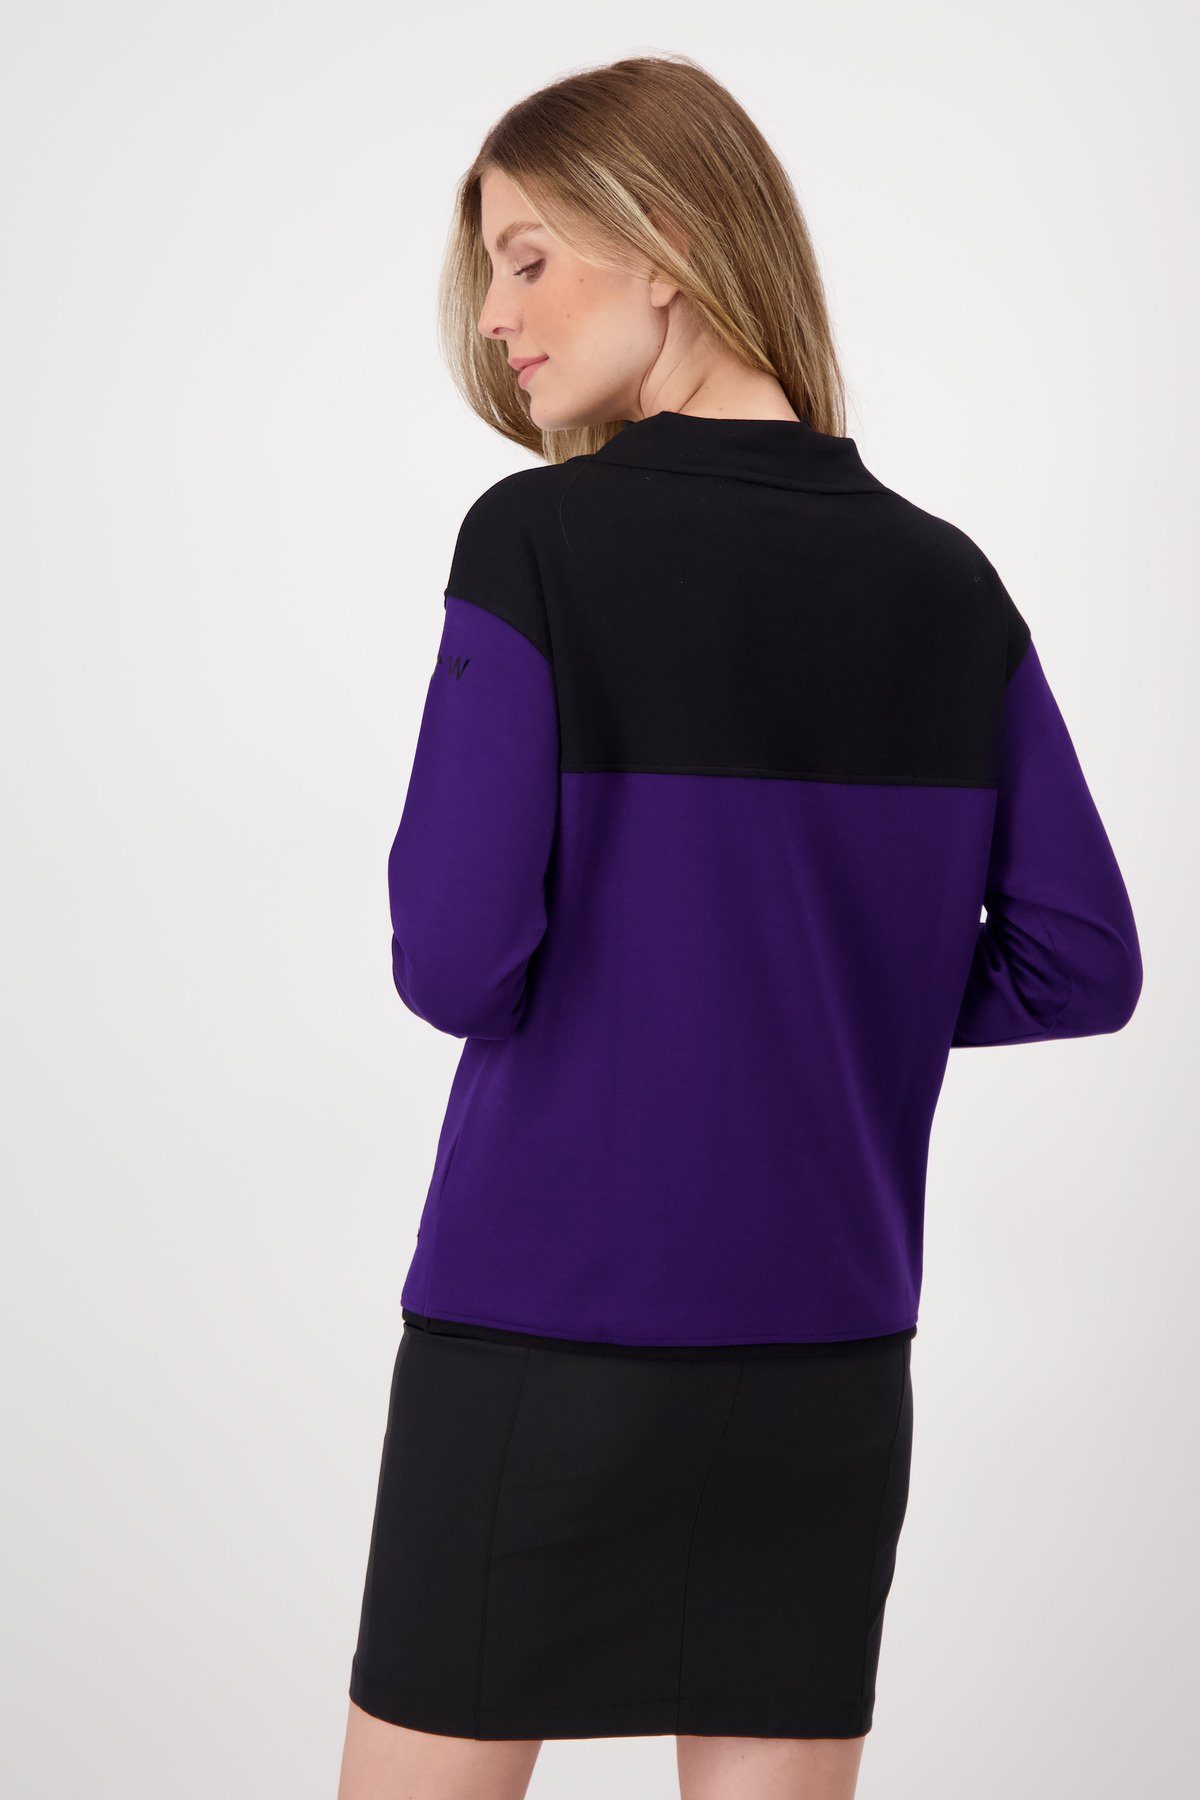 Monari Colourblocking Kapuzensweatshirt Sweatshirt schwarz